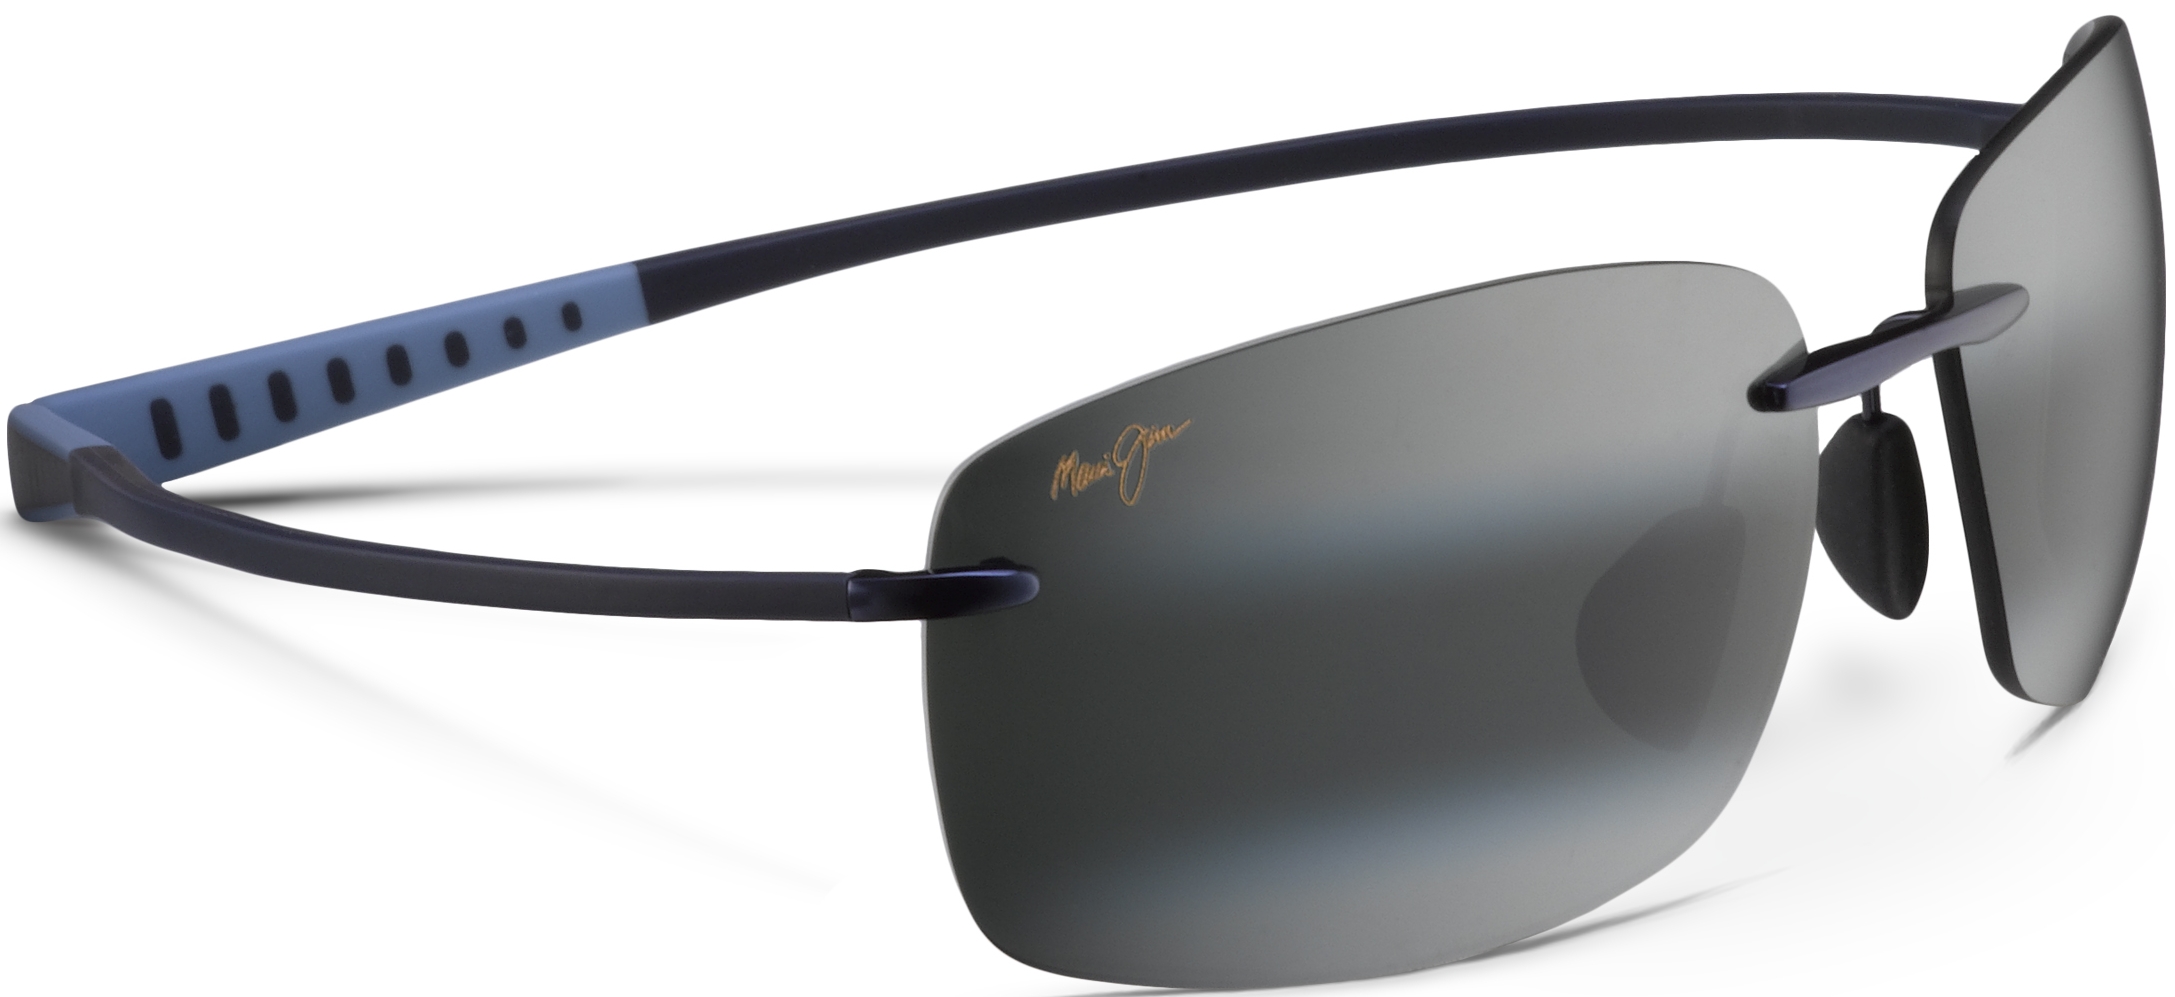 Maui Jim PolarizedPlus2 Sunglasses,  Kumu $299